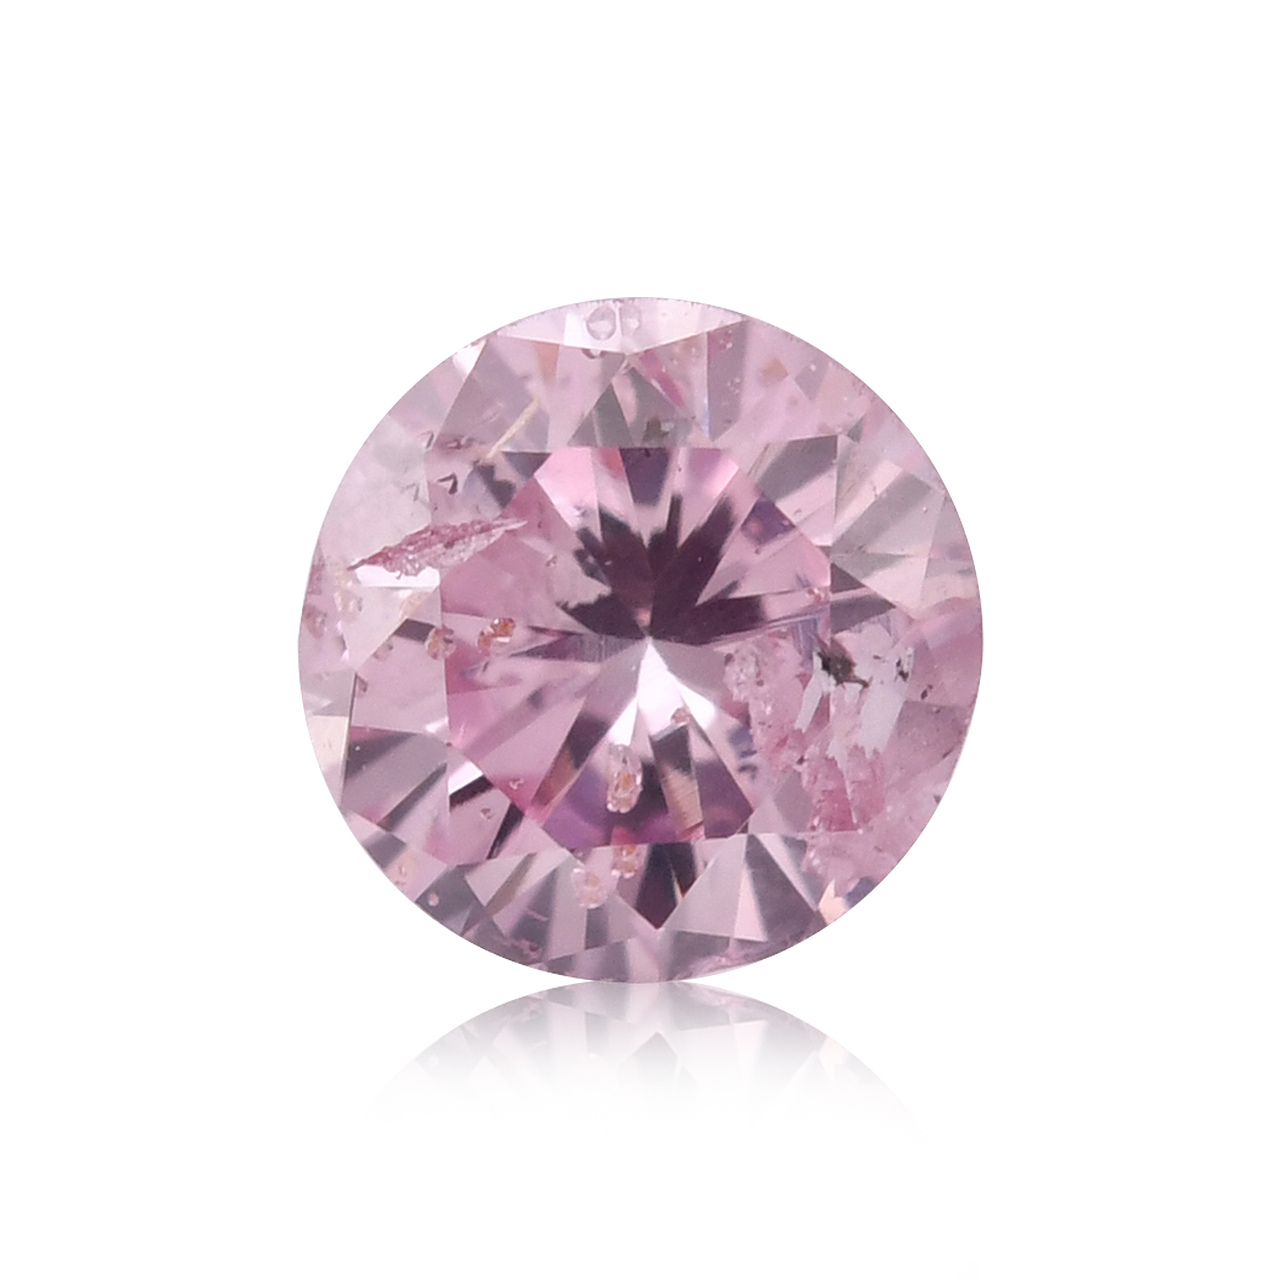 0.17 carat, Fancy Purplish Pink Diamond, Round Shape, (I2) Clarity, GIA,  SKU 457894